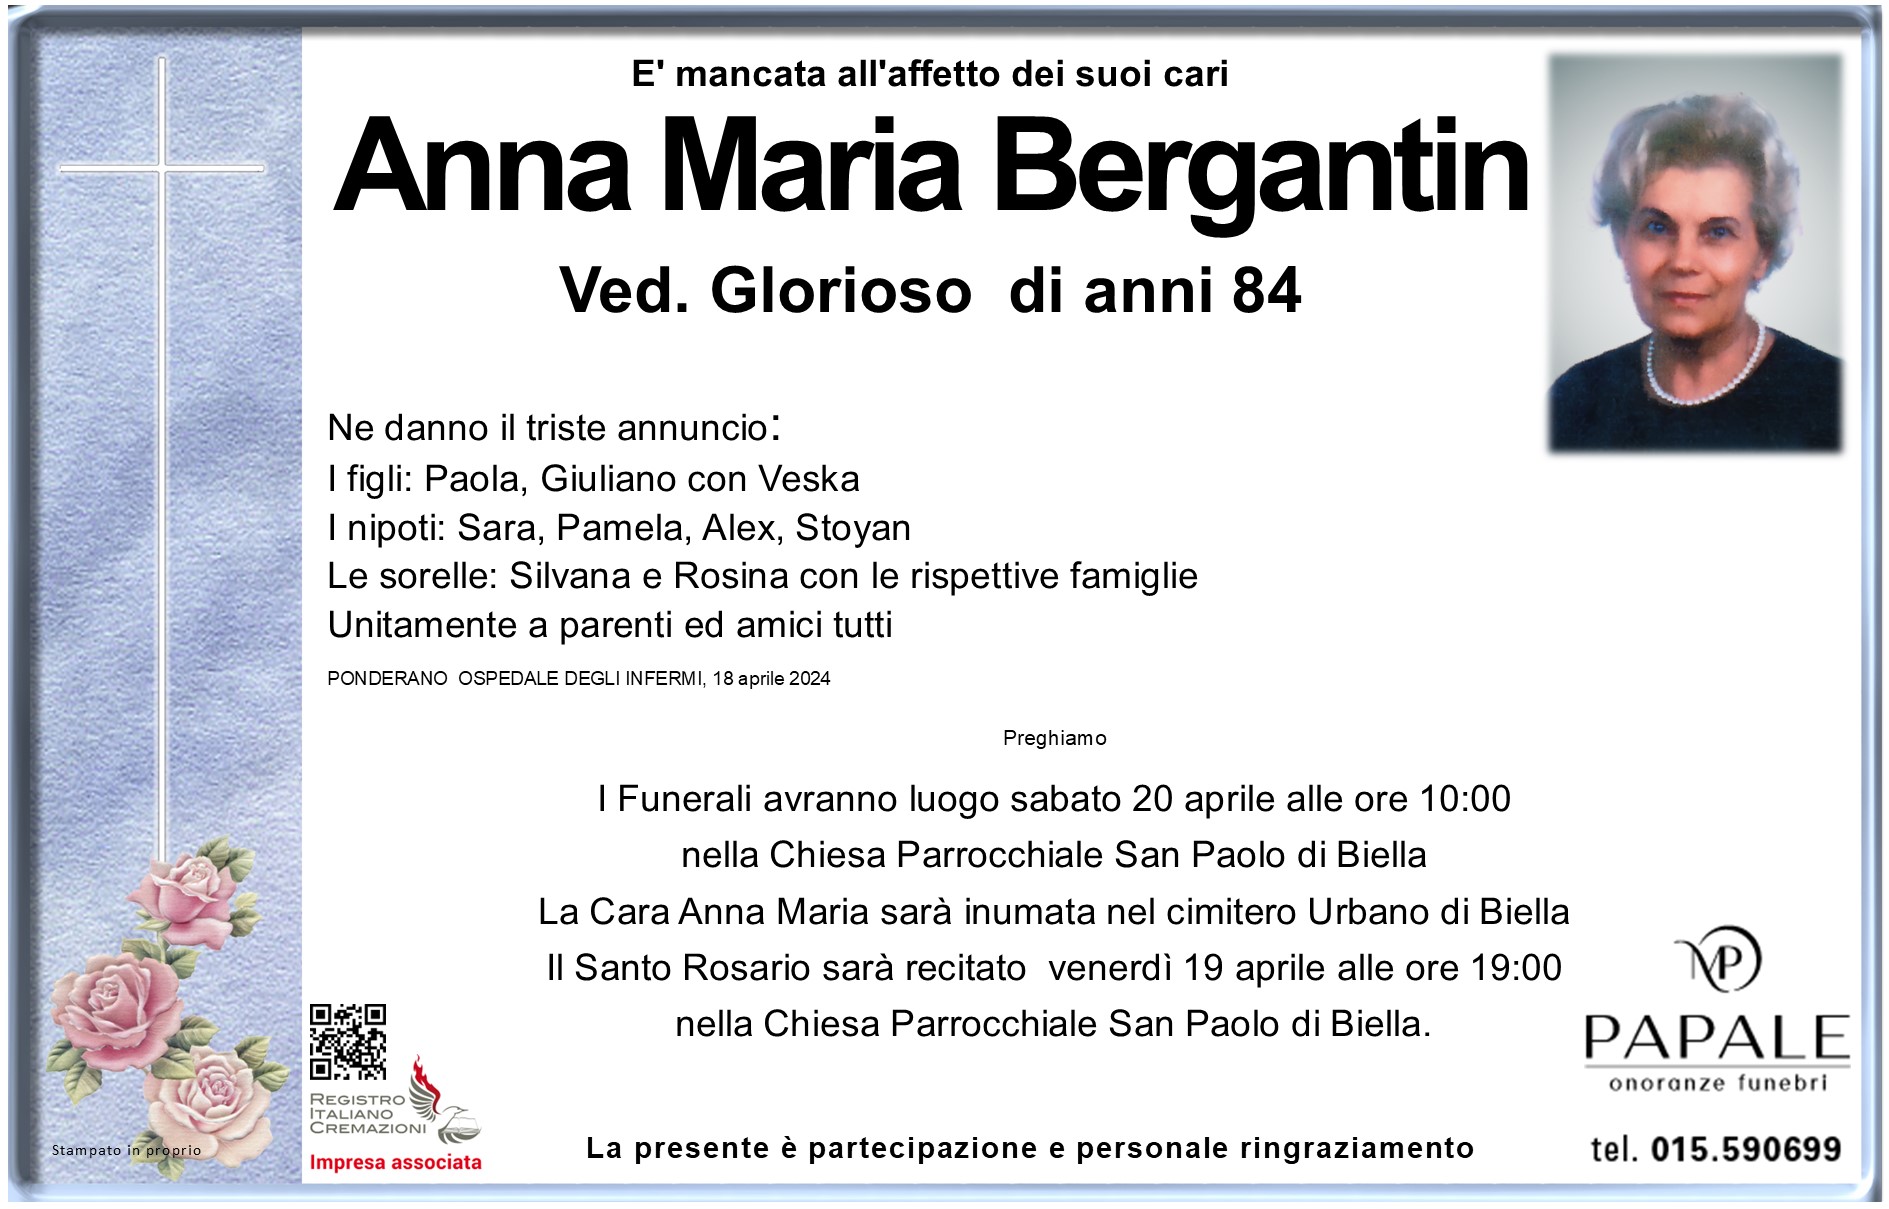 Onoranze Funebri Papale - Necrologi - Necrologio di Anna Maria Bergantin